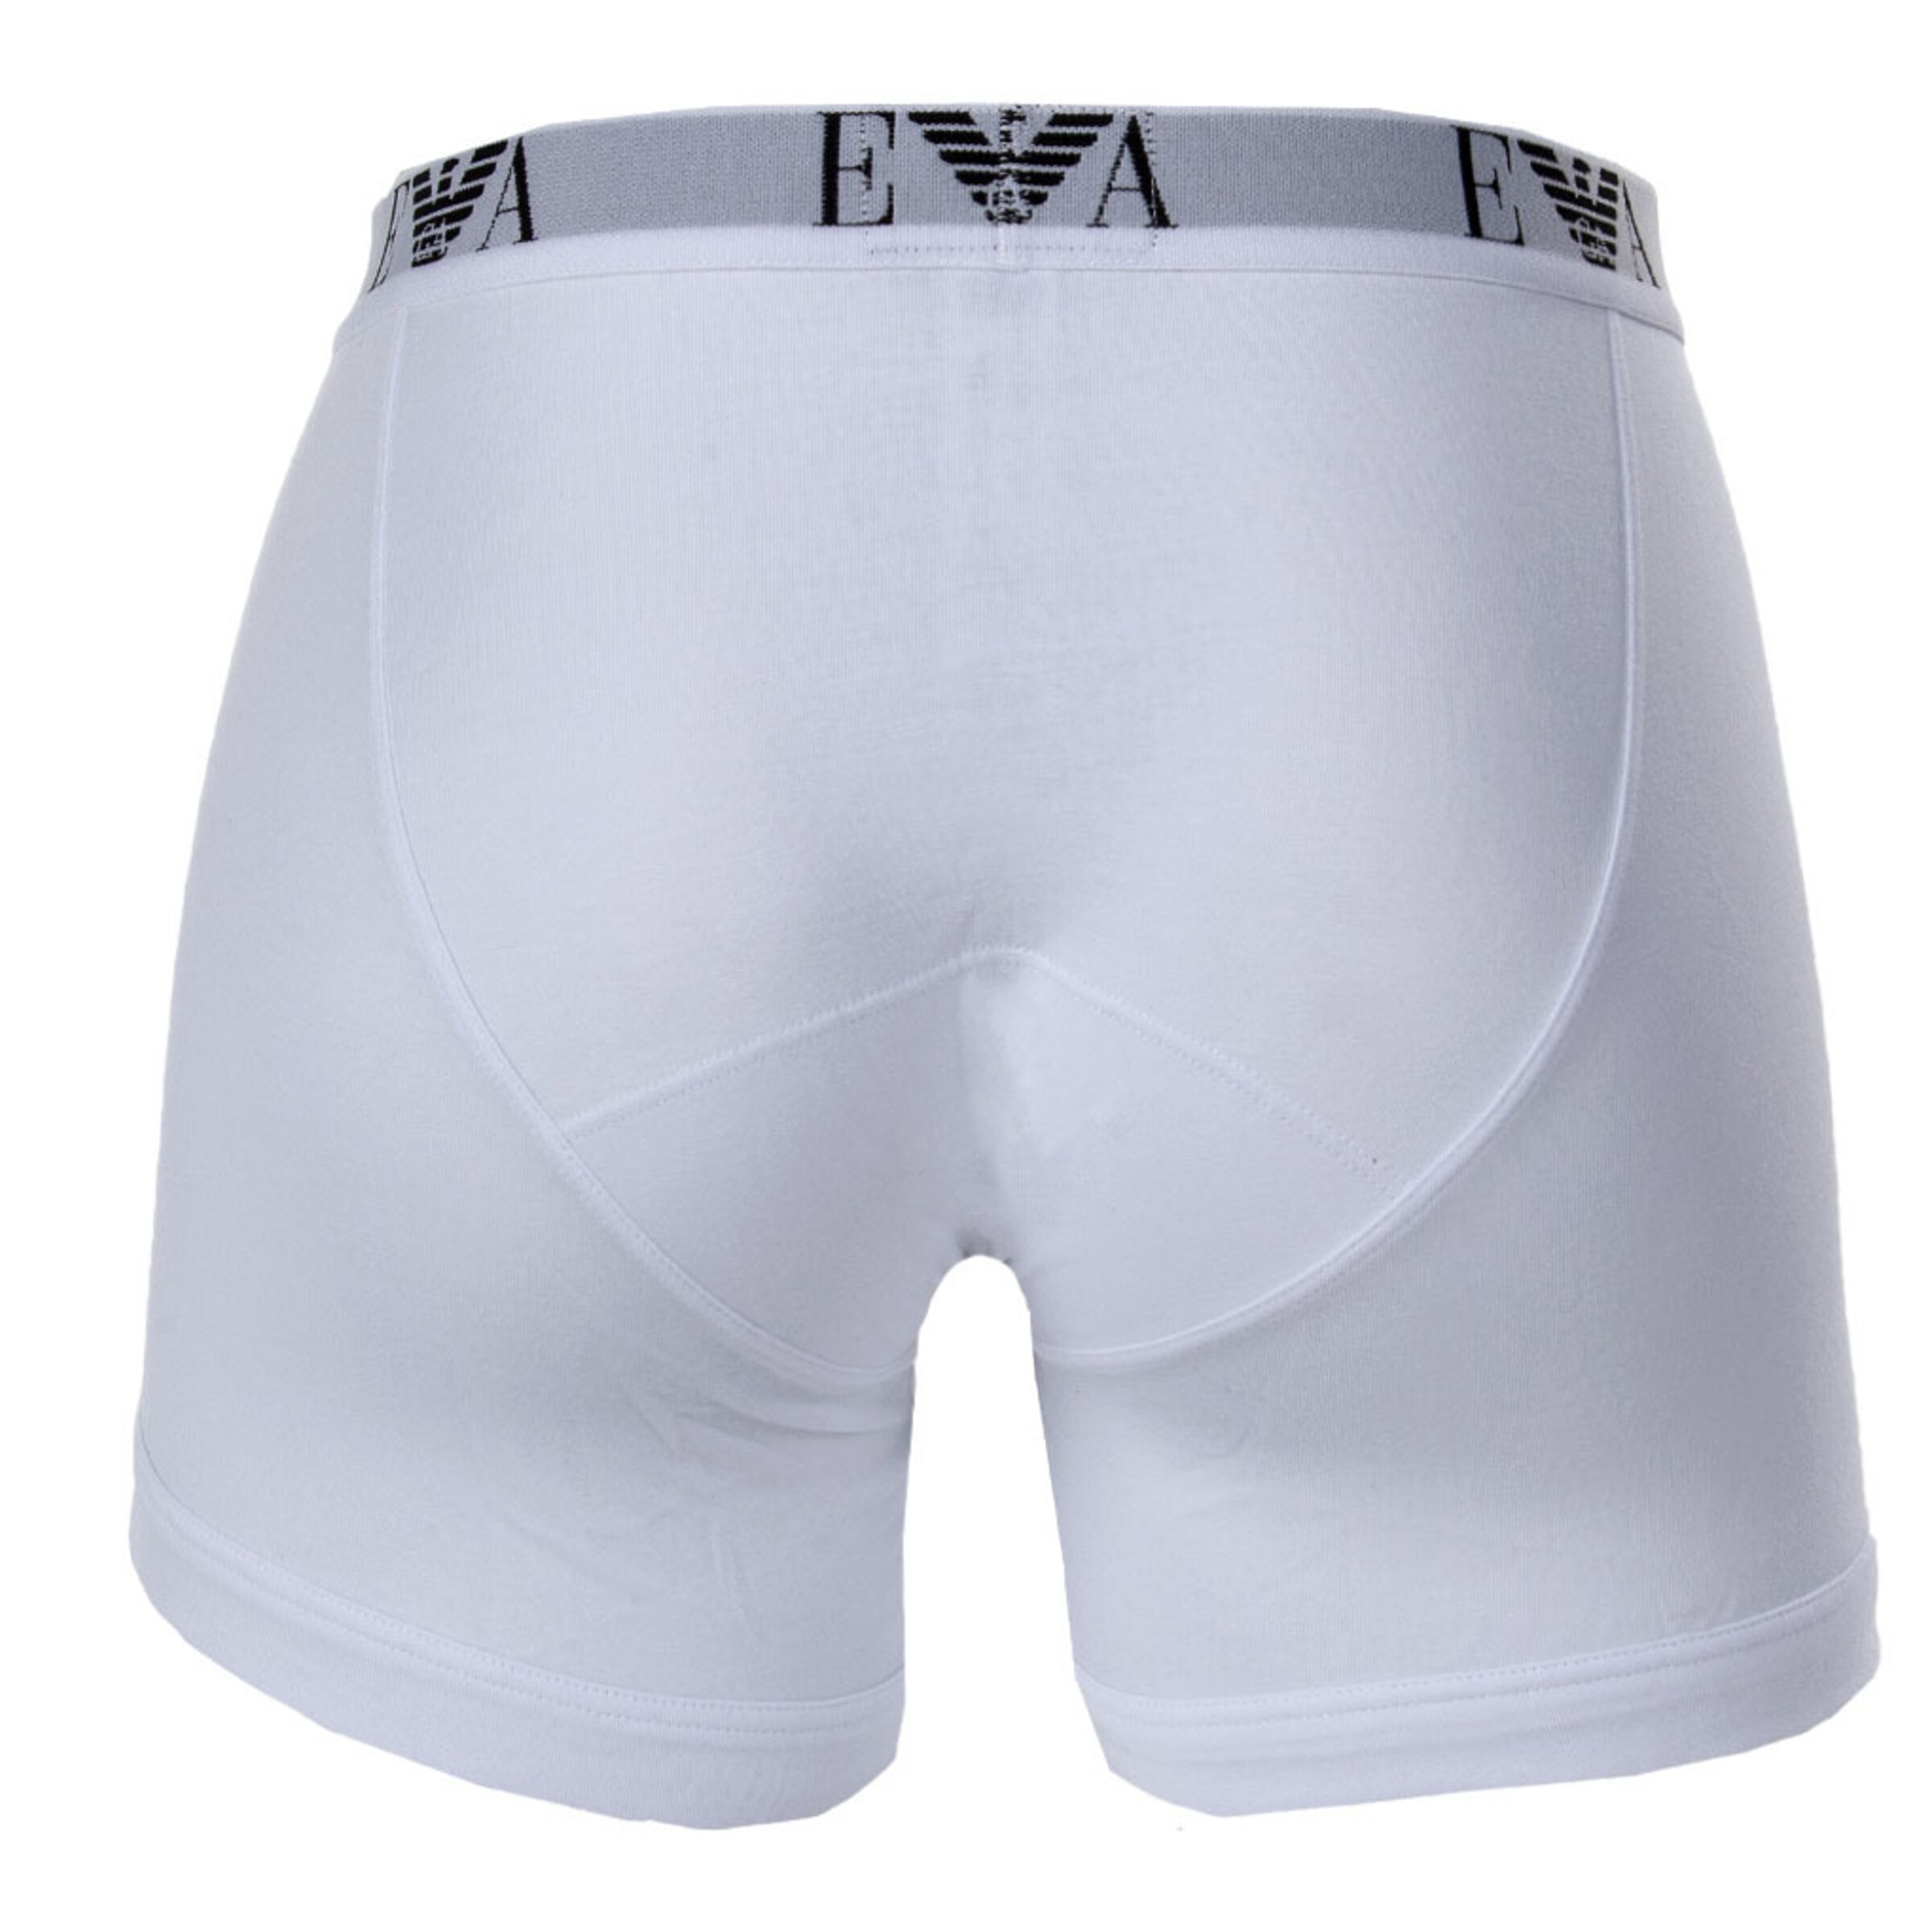 Vêtements Boxers Emporio Armani en Blanc 